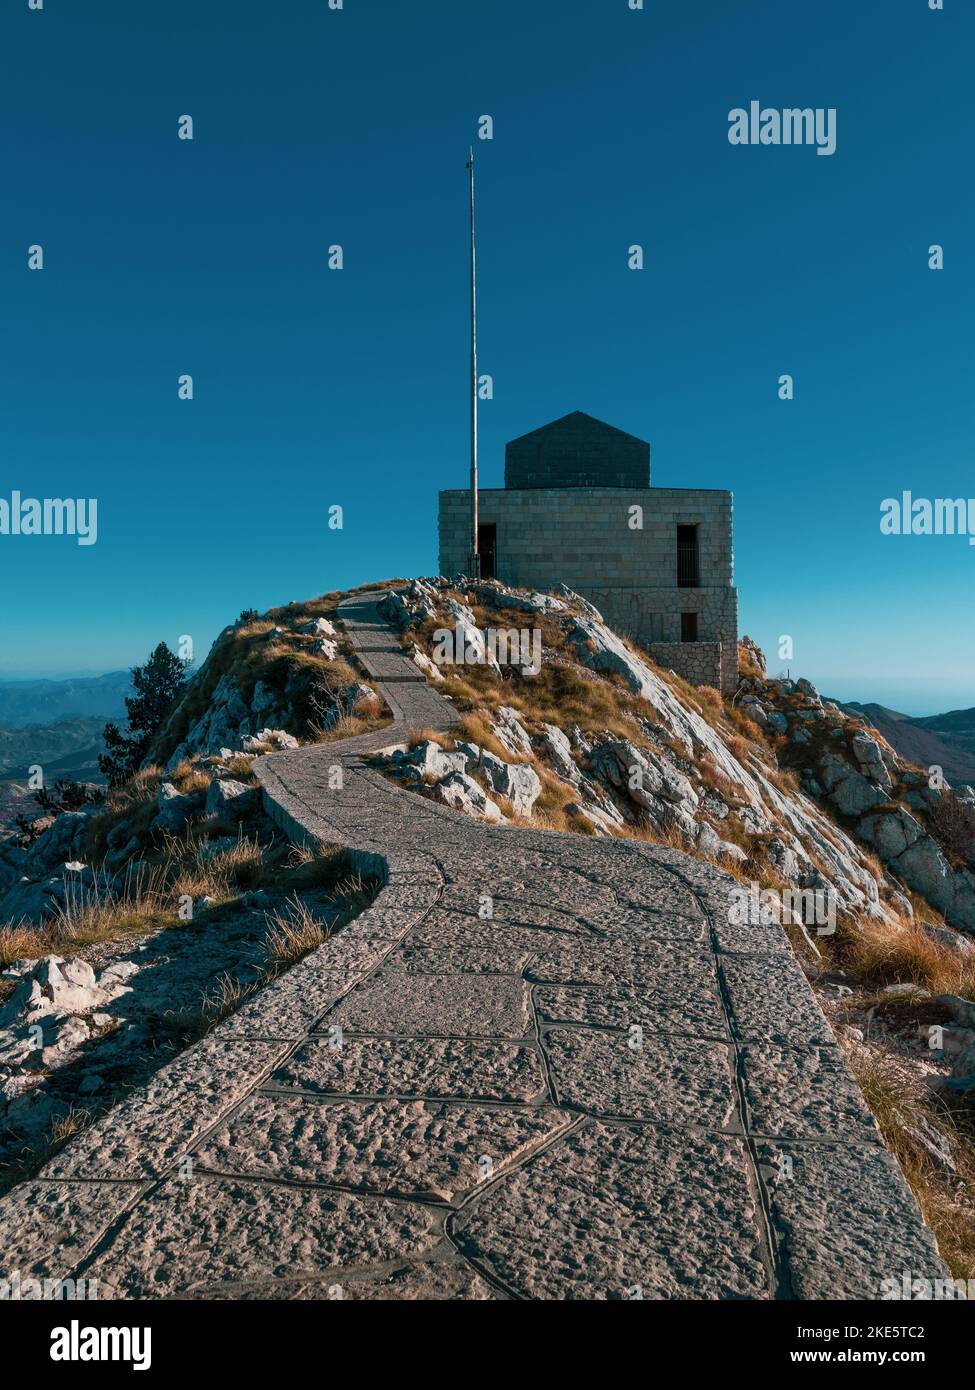 Tempel auf dem Gipfel des Berges Stockfoto